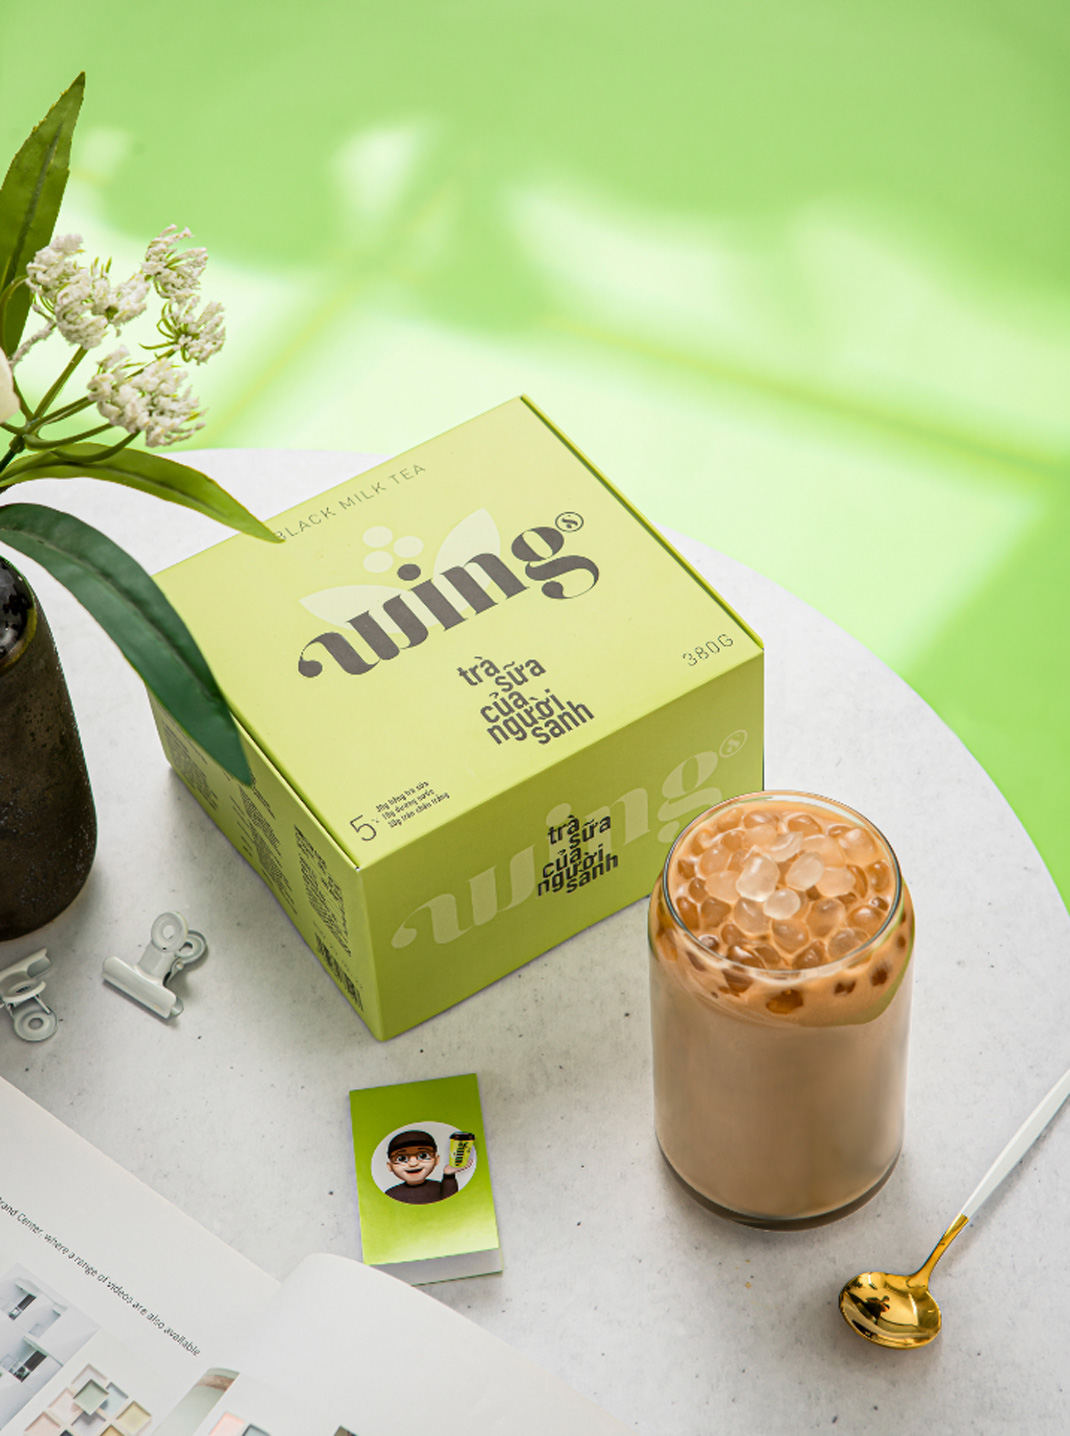 WINGS 速溶奶茶 - 黑奶茶 越南 河内 饮料 奶茶 字体设计 绿色 包装设计 logo设计 vi设计 空间设计